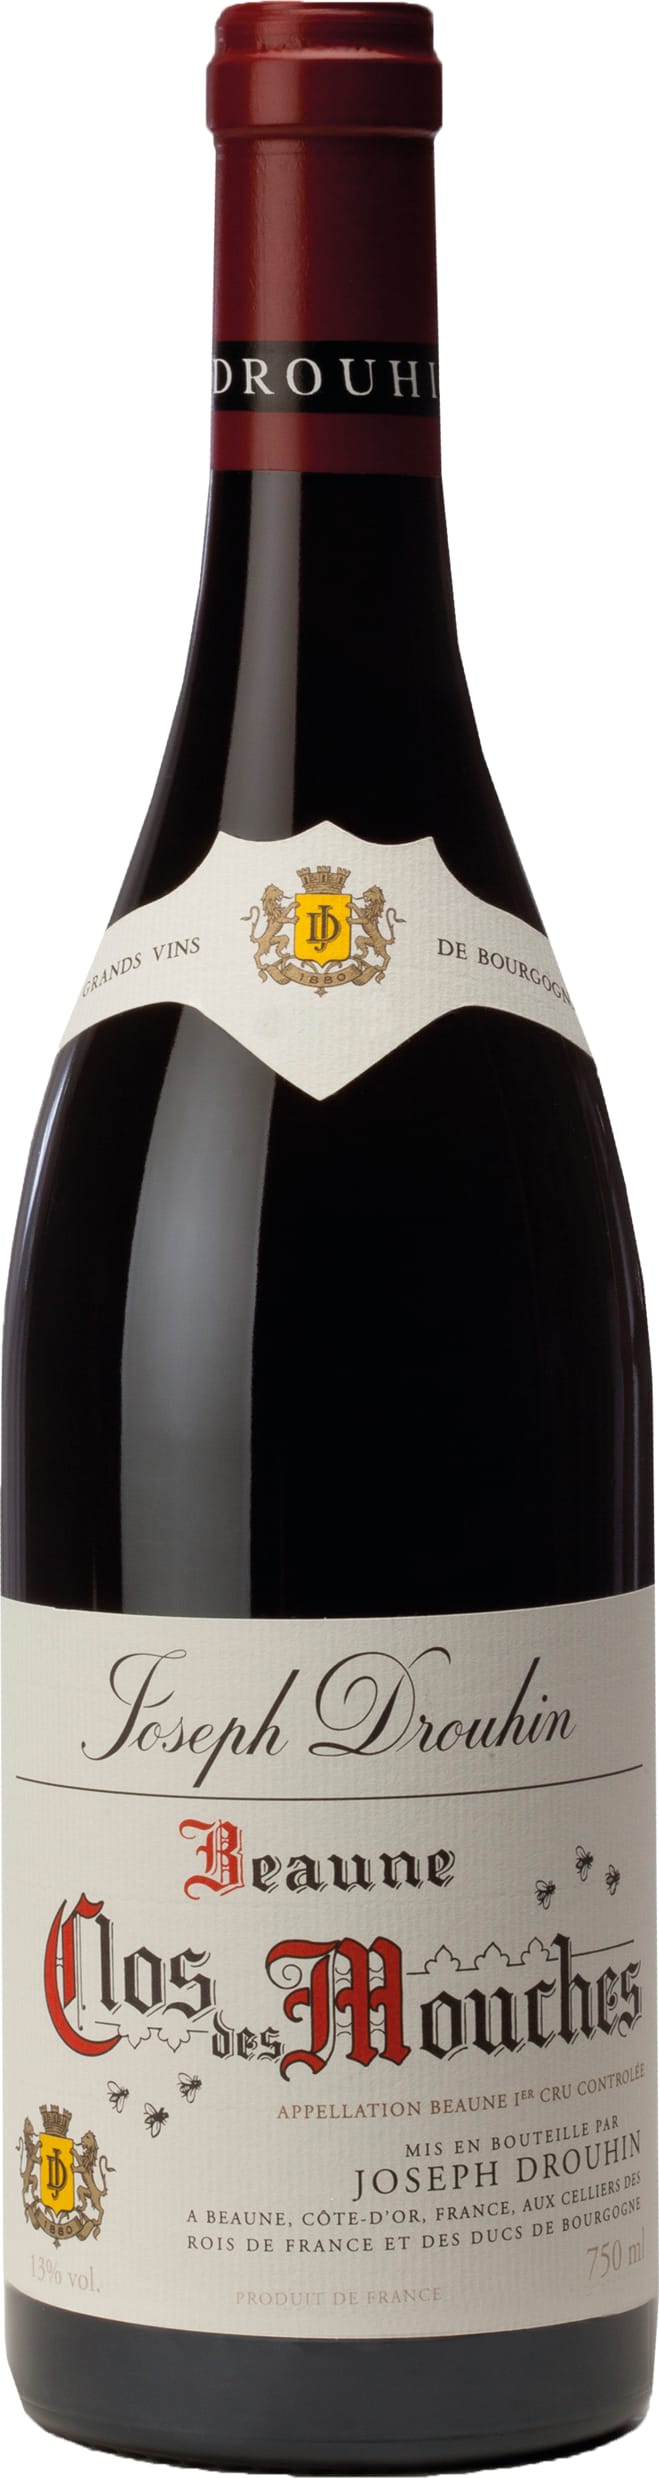 Joseph Drouhin Beaune Clos des Mouches Premier Cru 2017 75cl - Buy Joseph Drouhin Wines from GREAT WINES DIRECT wine shop